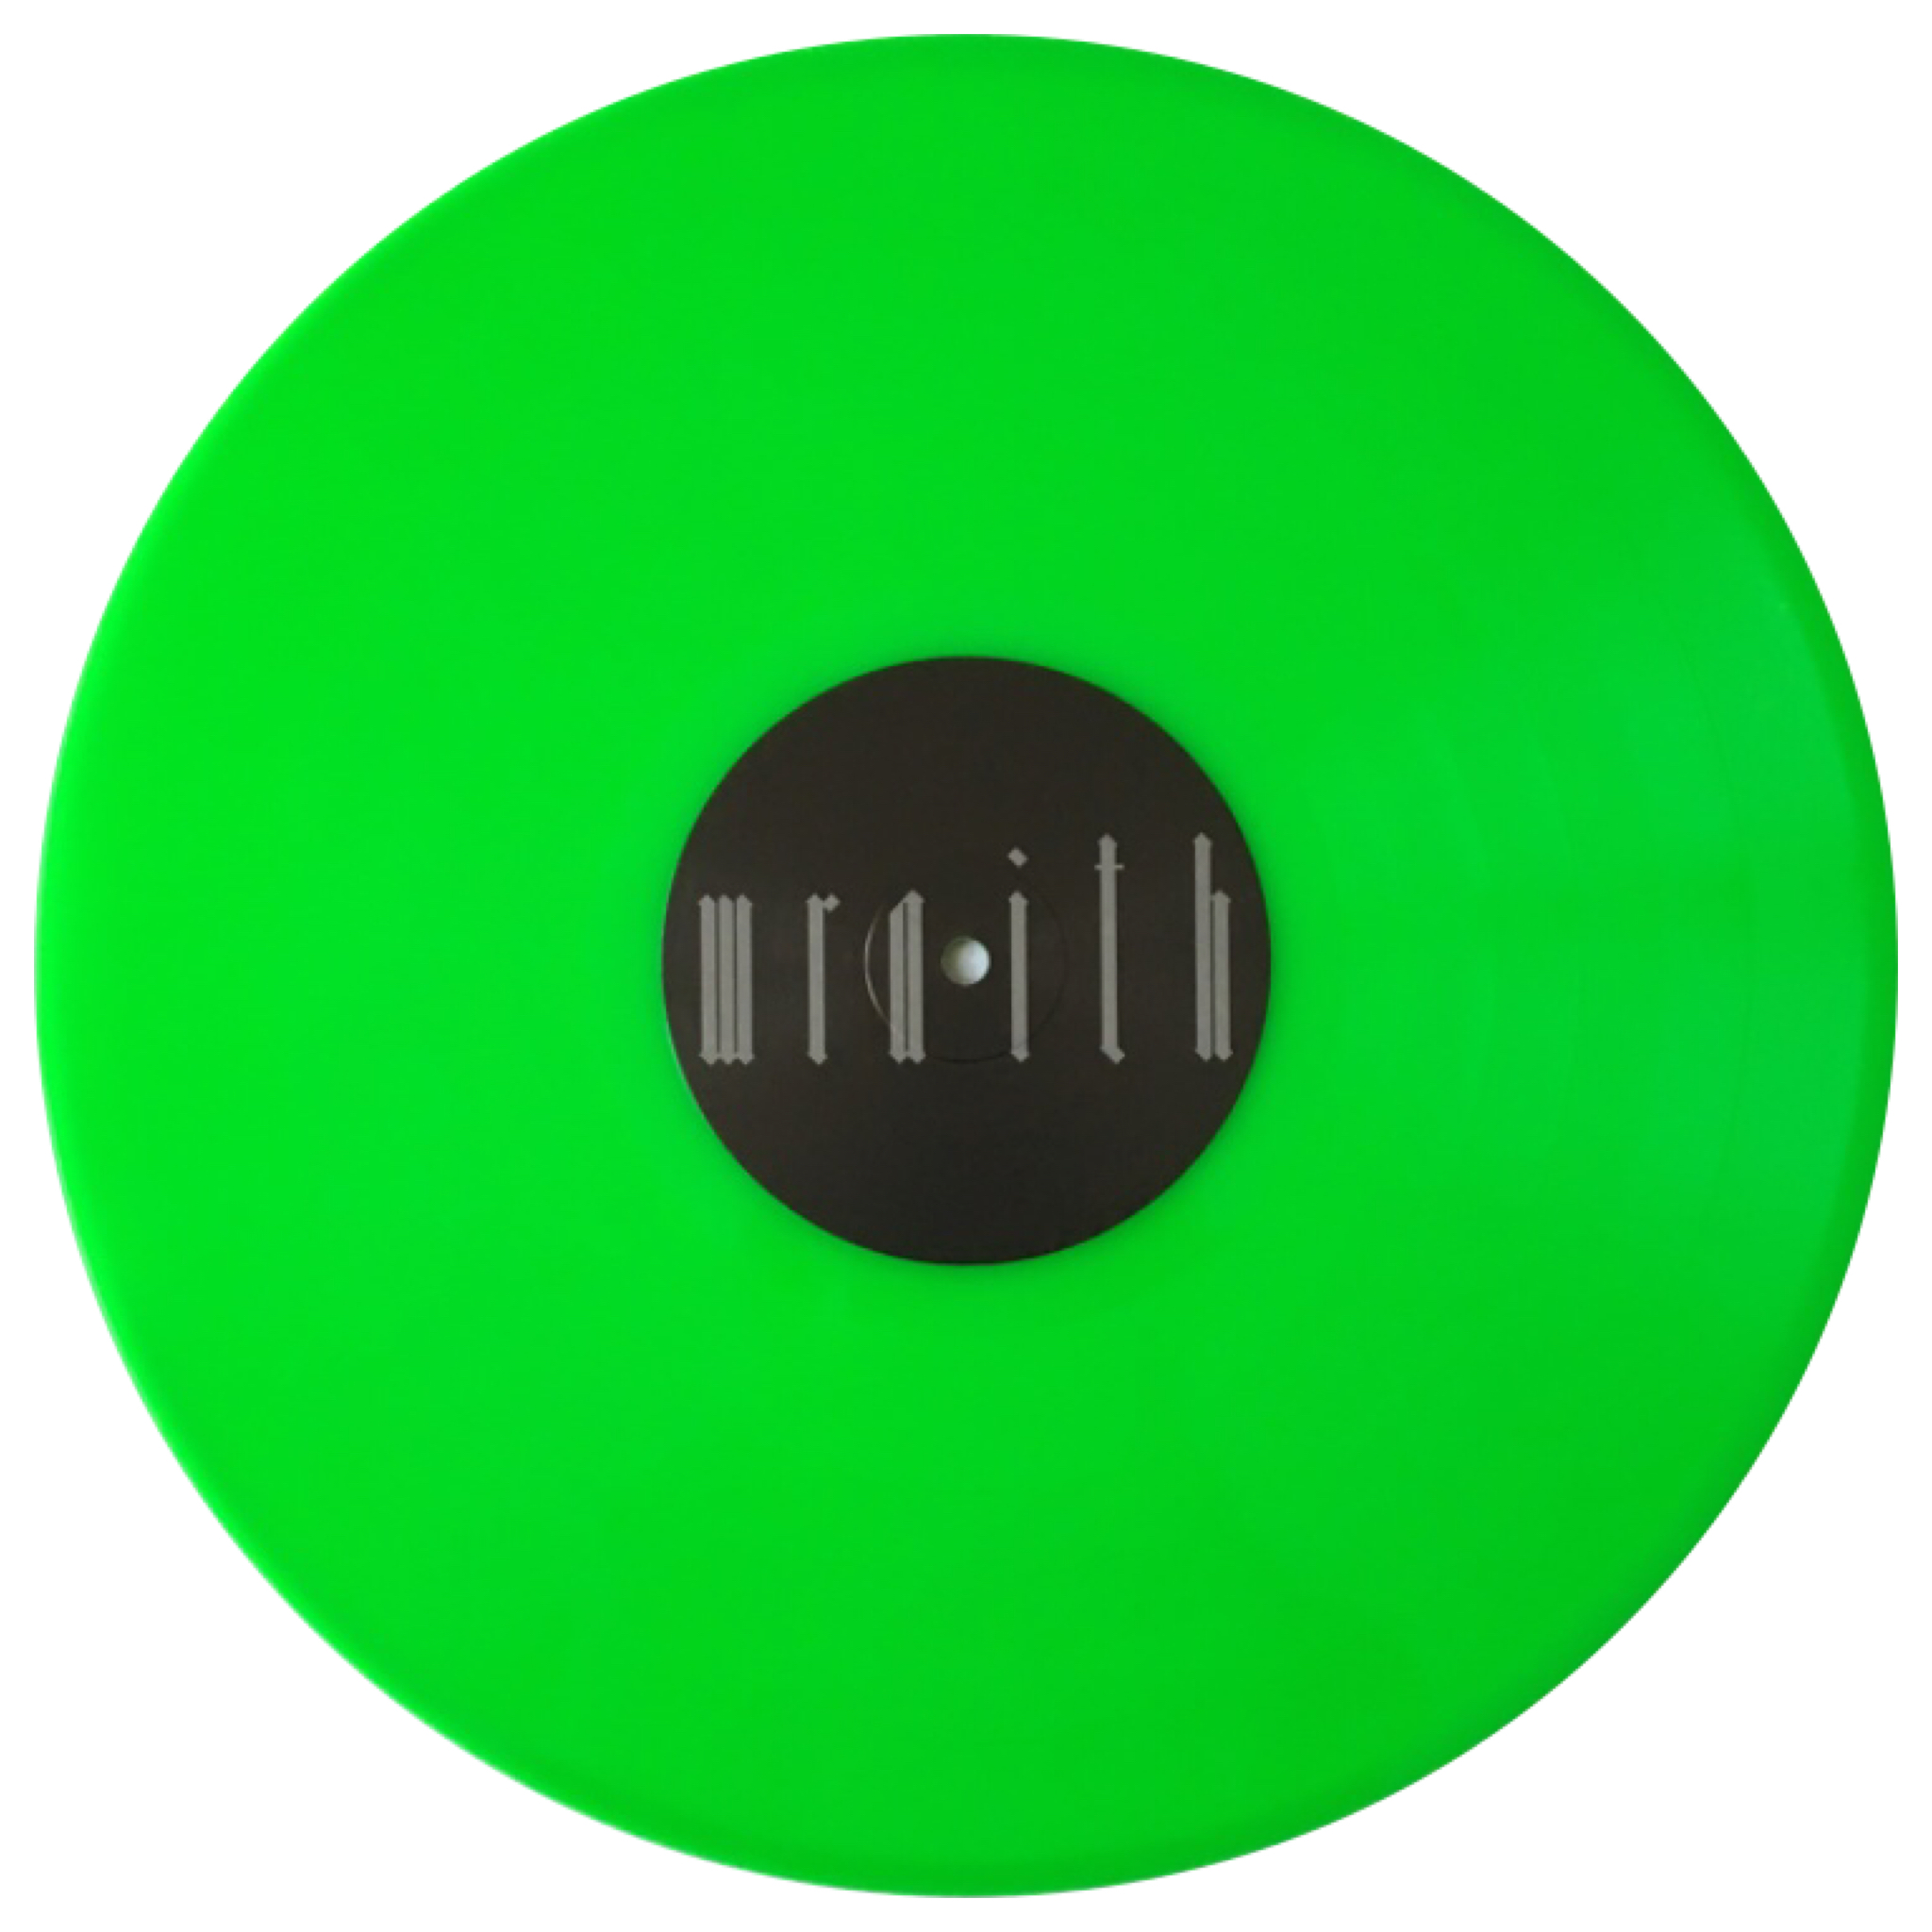 https://www.rawvibesrecords.com/wp-content/uploads/2019/03/Teeth-Of-The-Sea-WRAITH-Rocket-Recordings-Limited-Neon-Green-Gatefold-vinyl.jpg